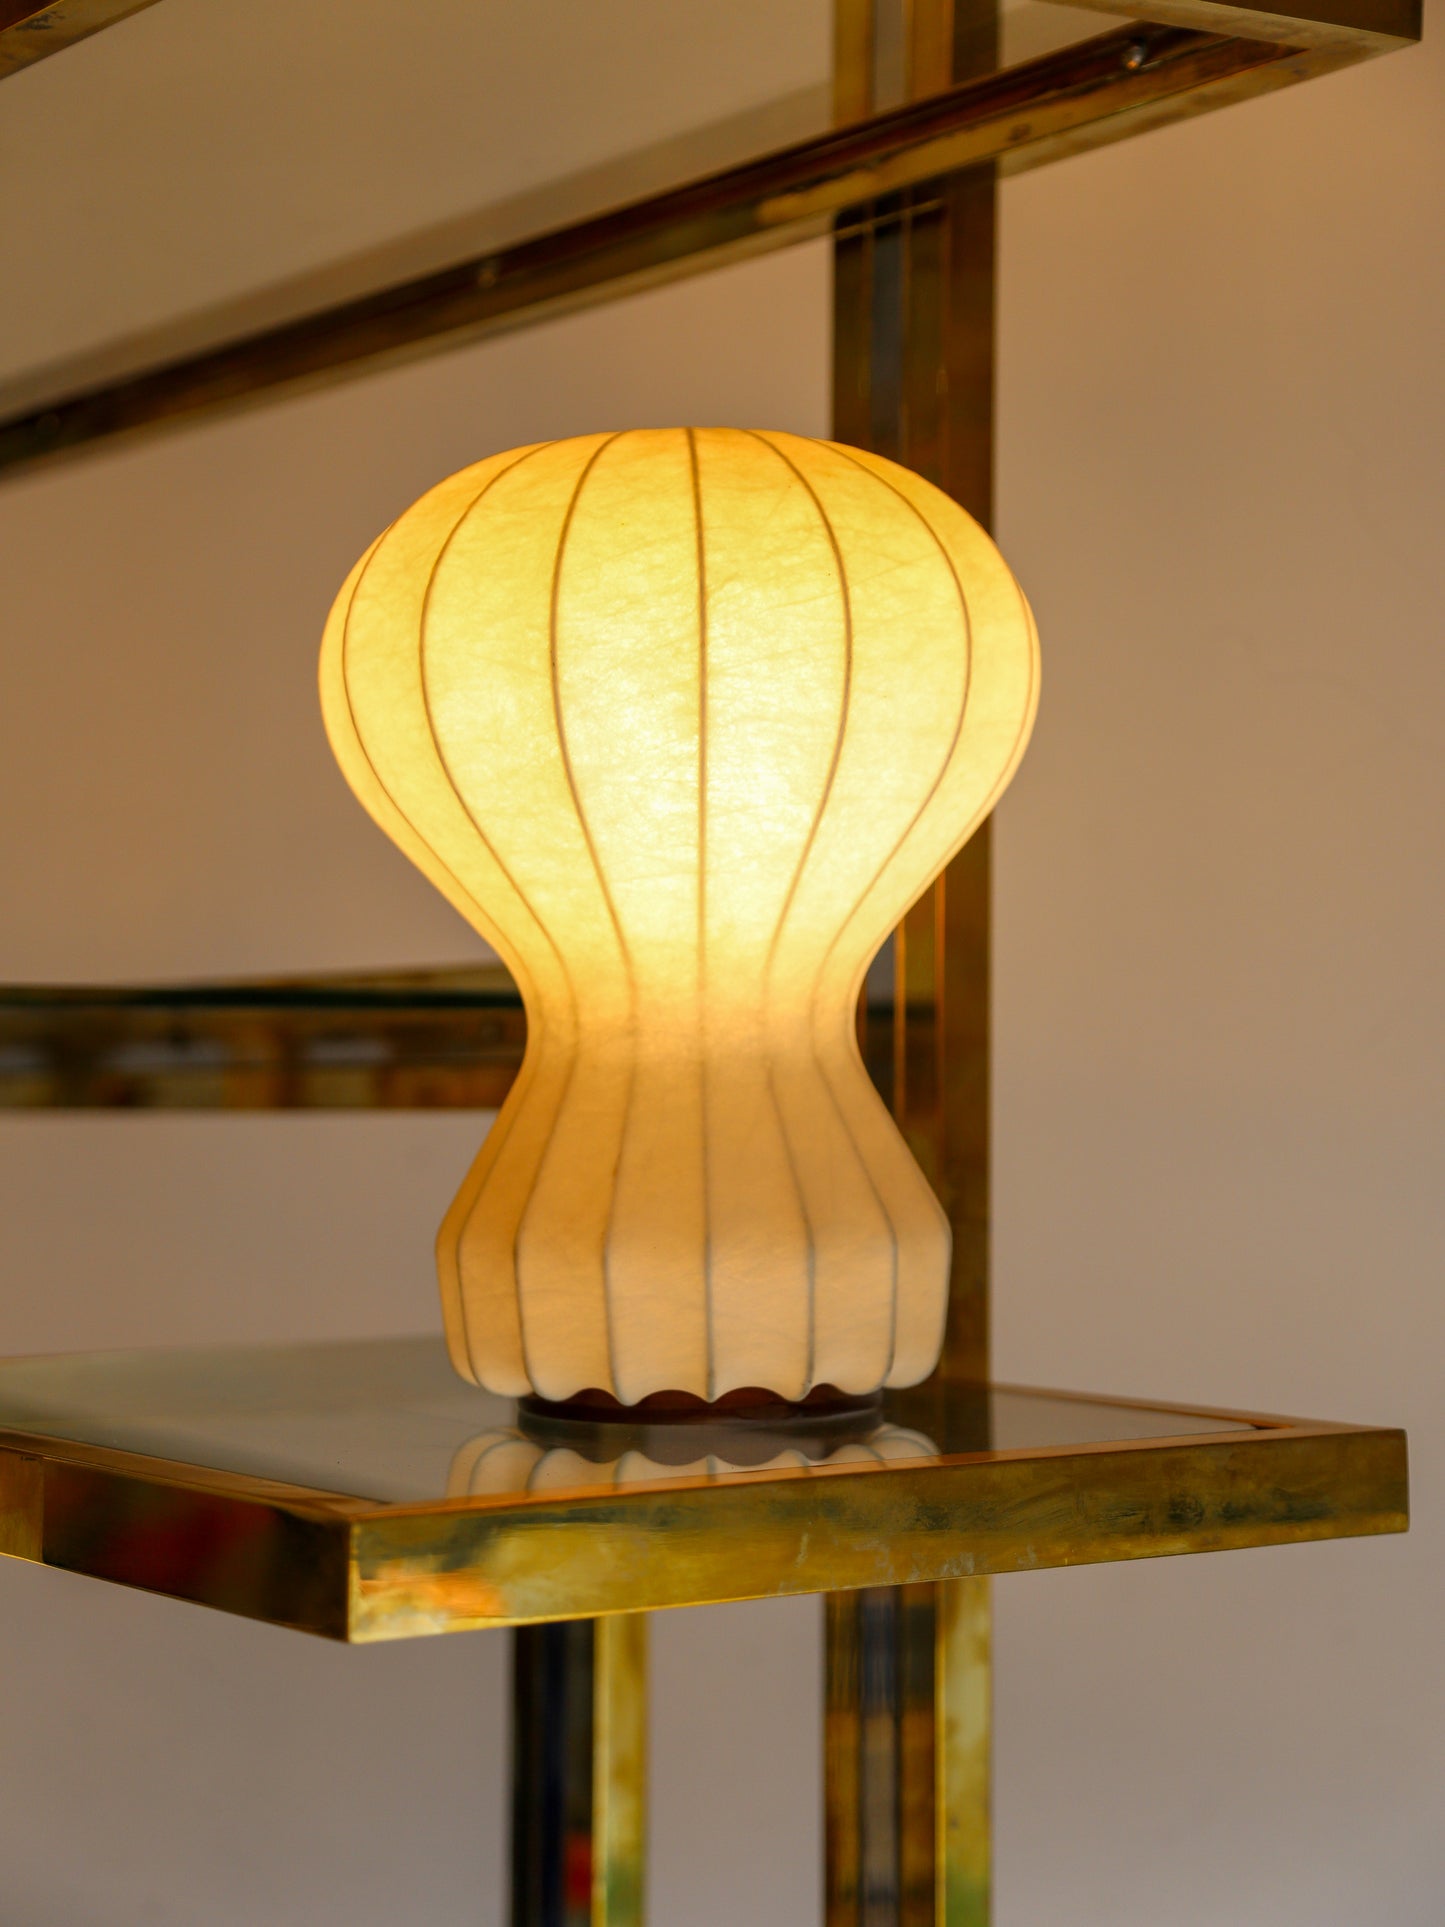 " Gatto " Cocoon Table Lamp by Achille & Pier Giacomo Castiglioni for Flos